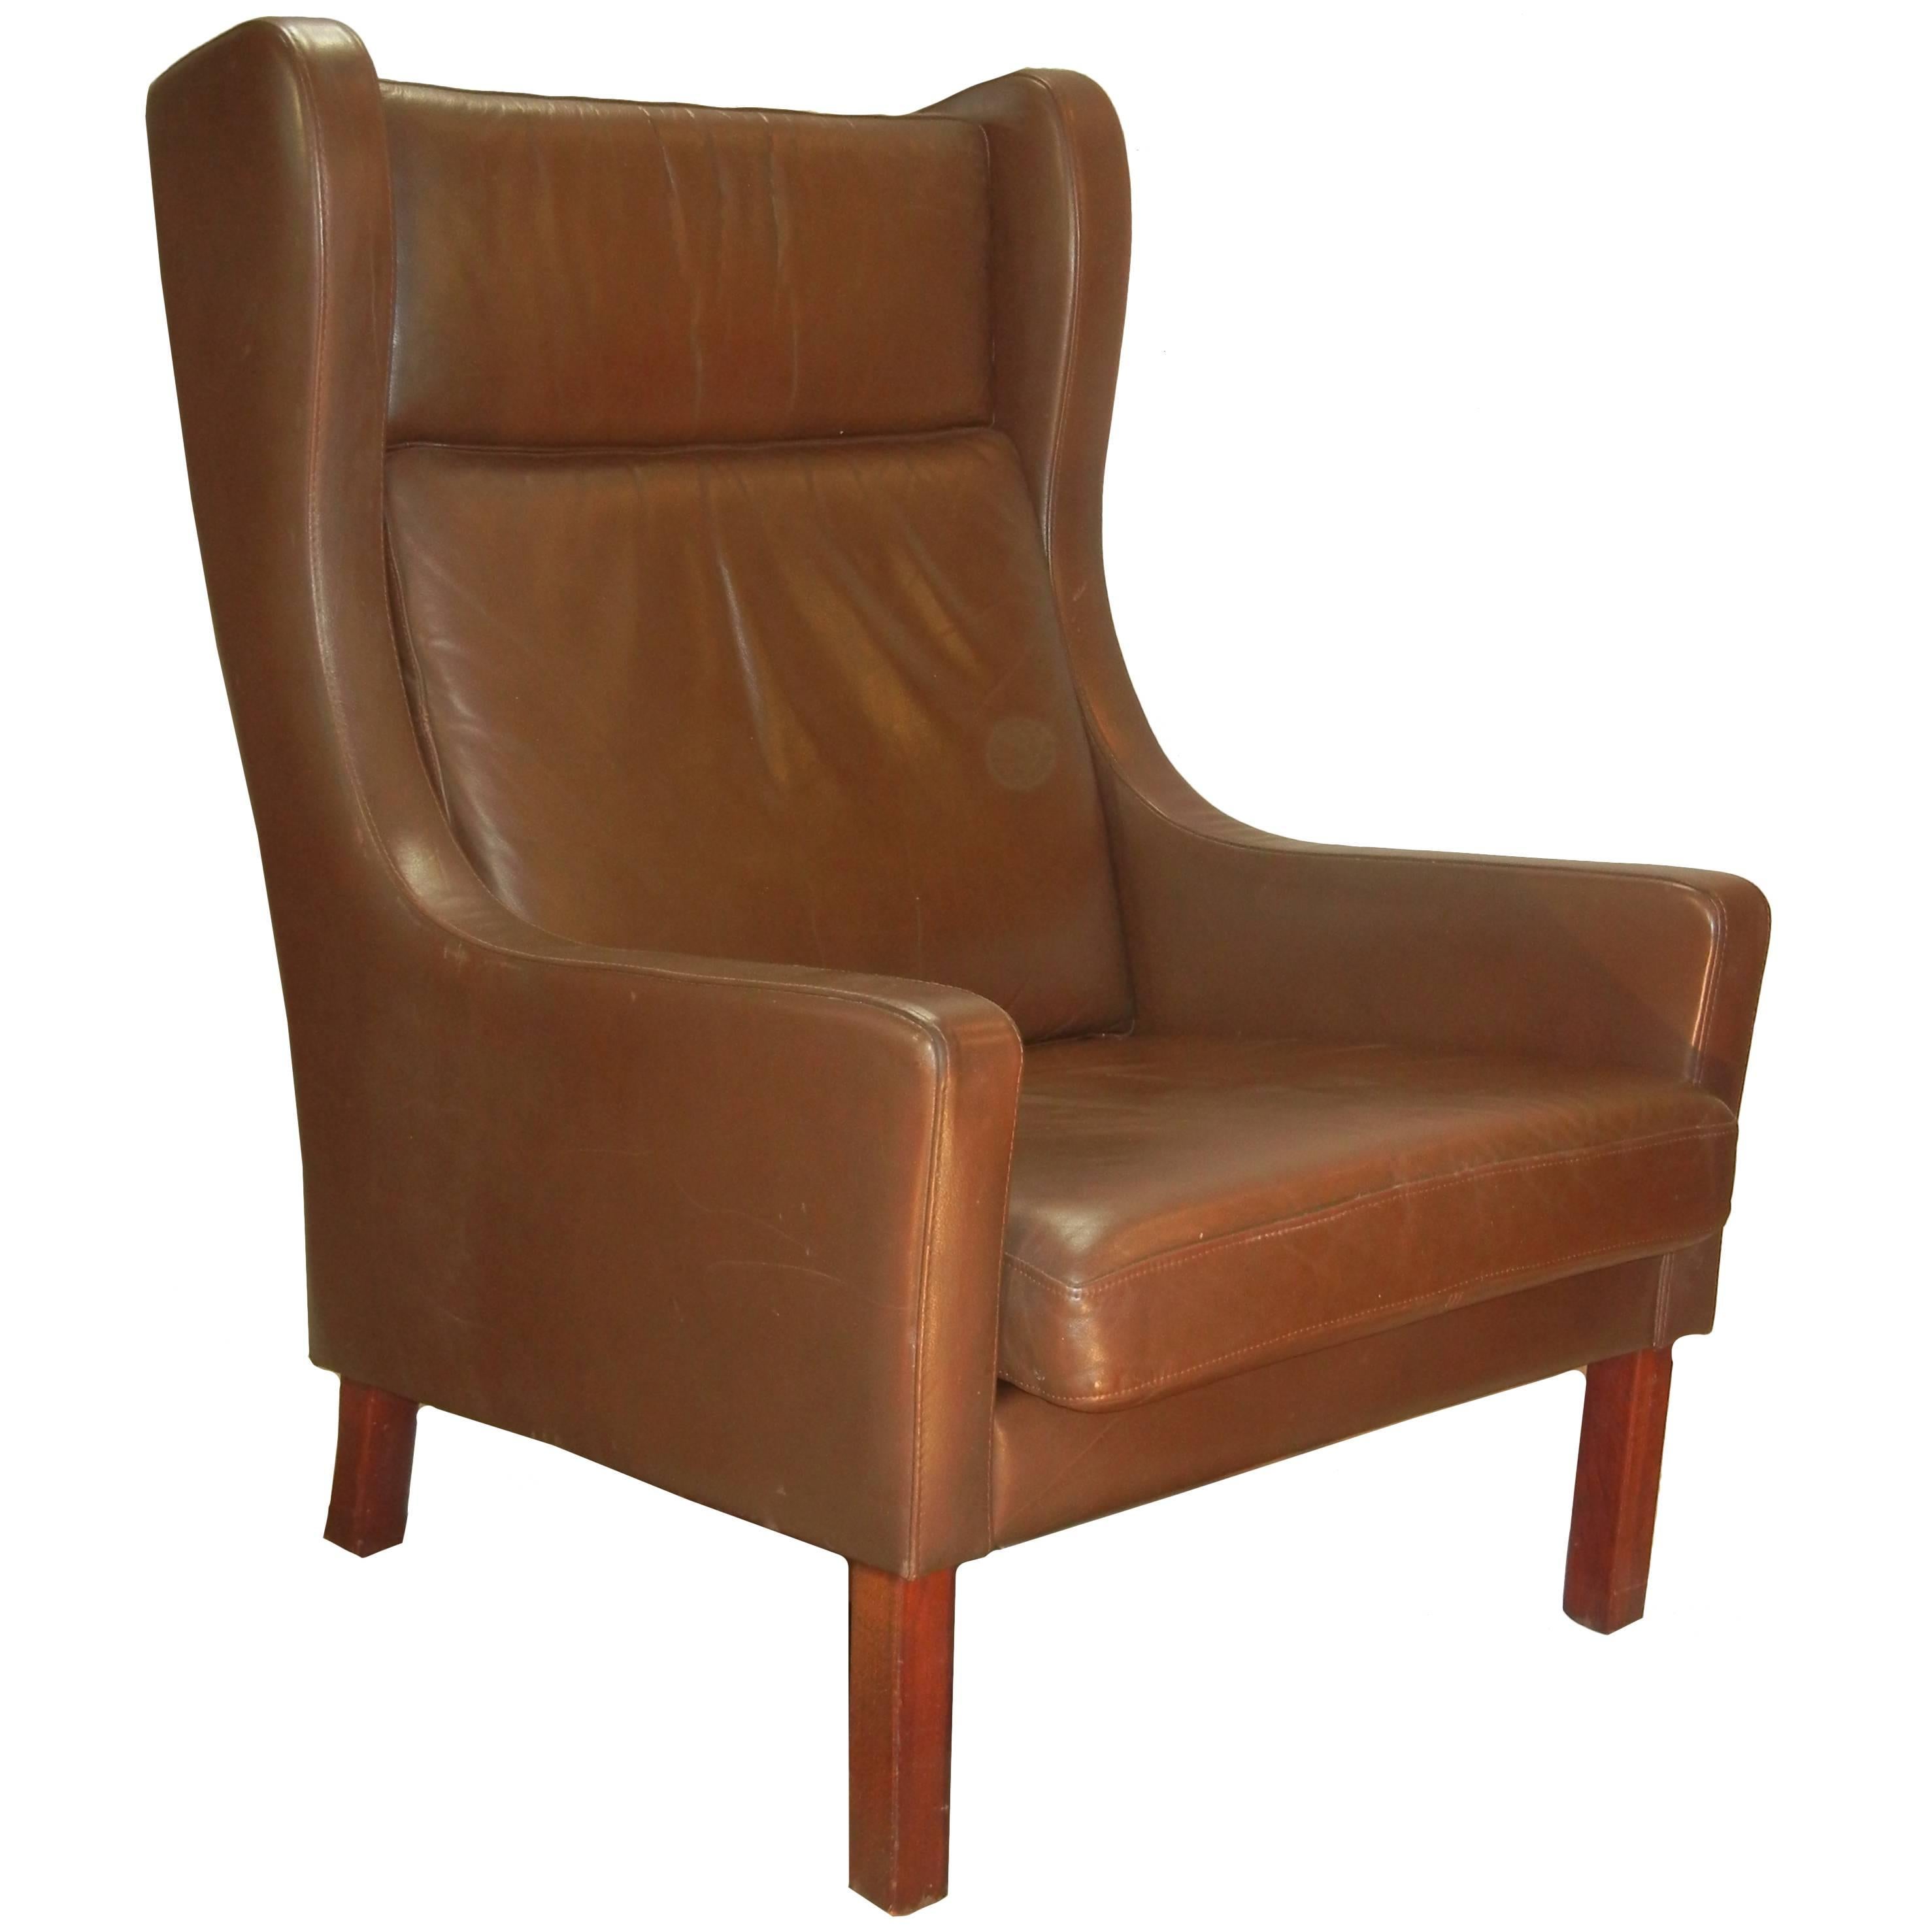 Leather Wing Chair in Danish Modern Børge Mogensen Style, circa 1970